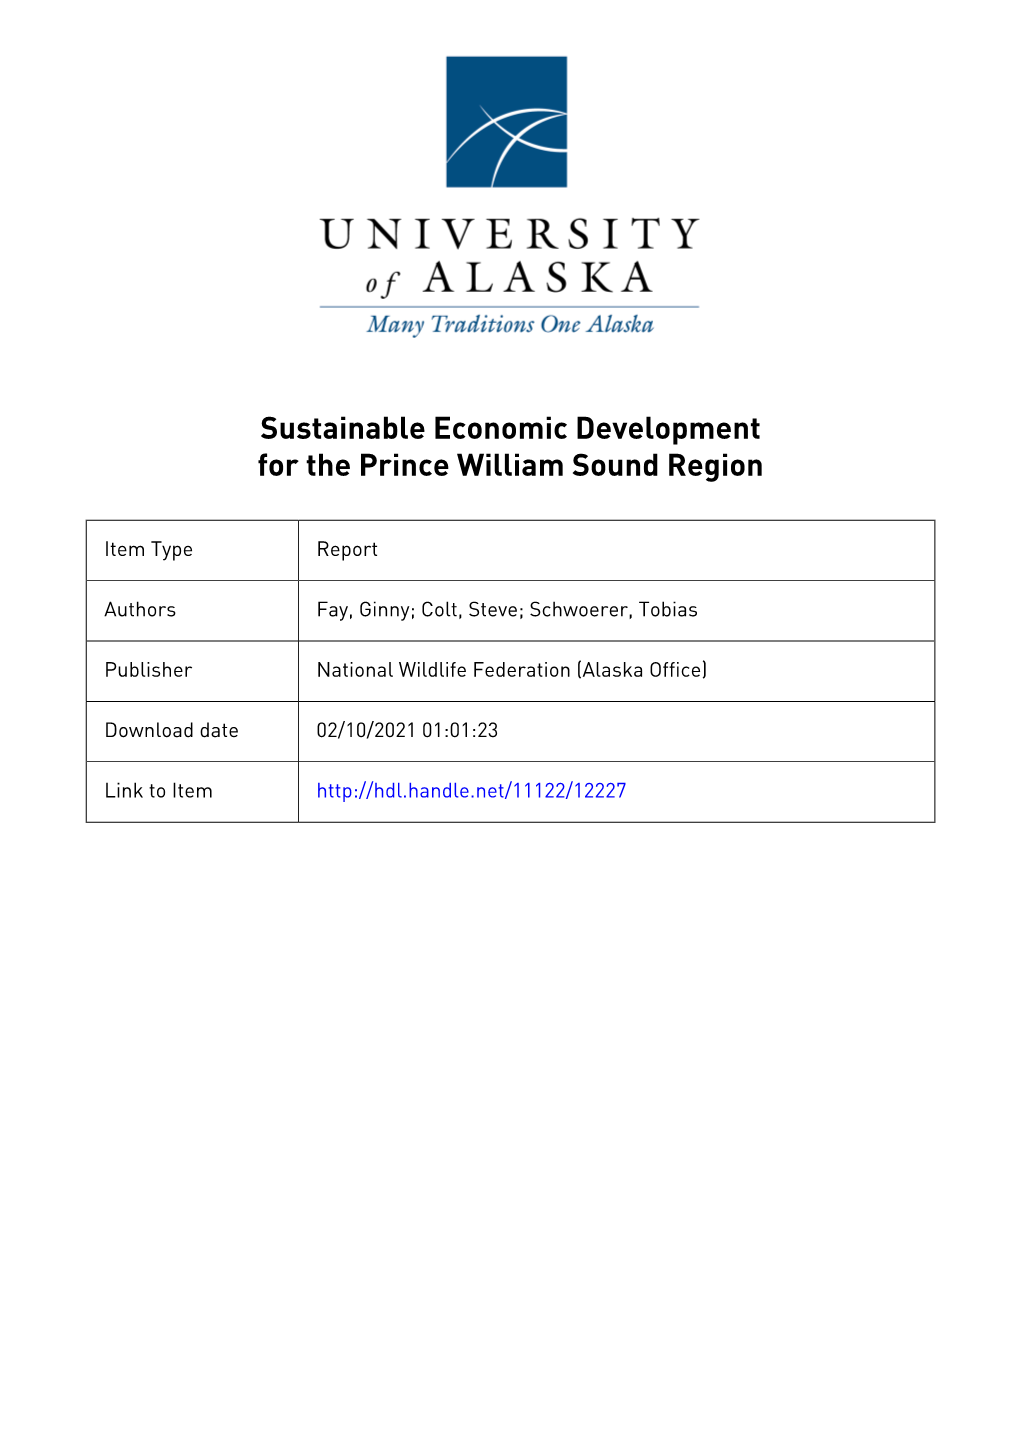 Sustainable Economic Development for the Prince William Sound Region